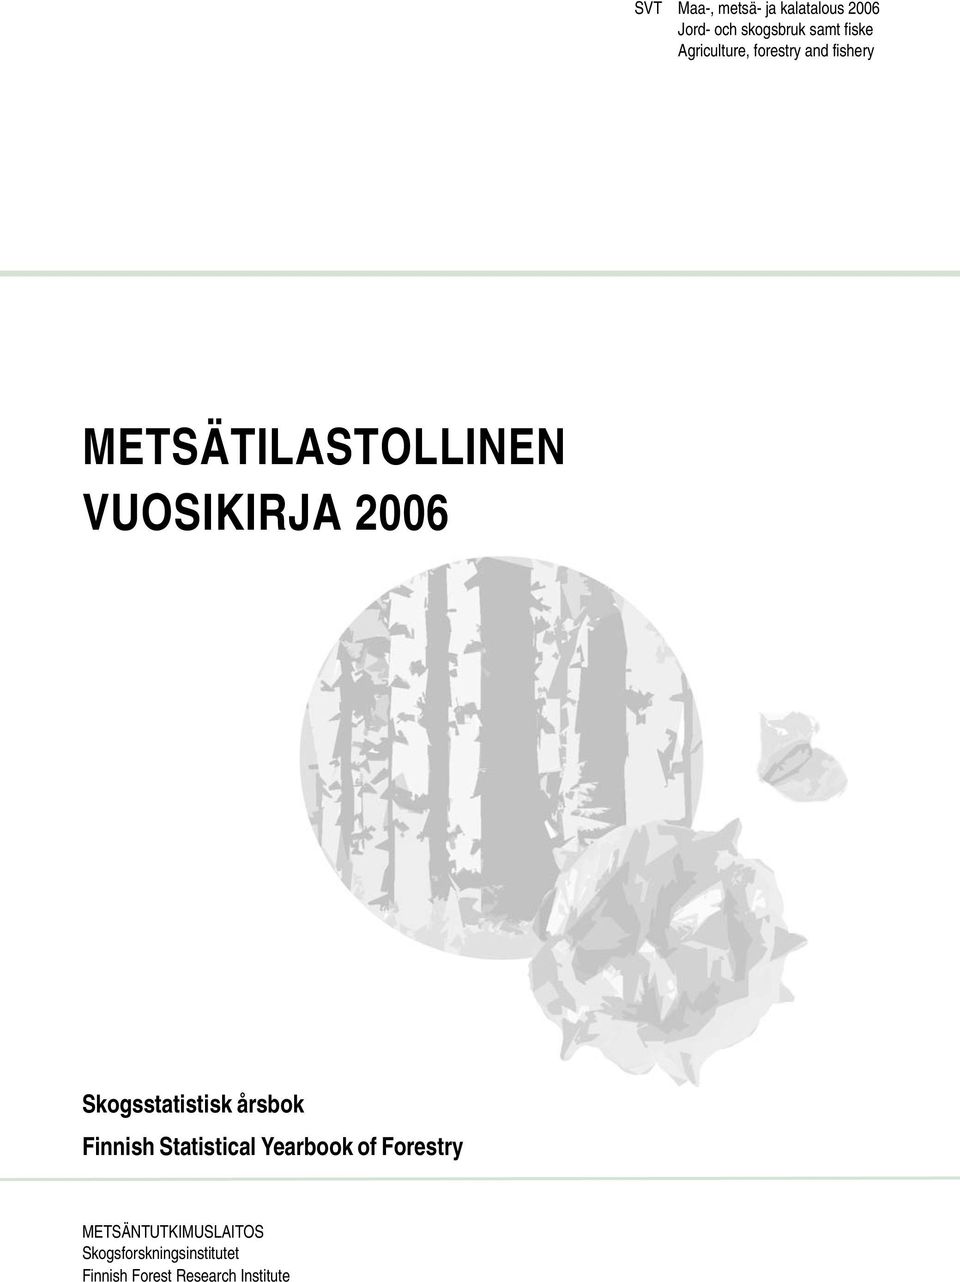 Skogsstatistisk årsbok Finnish Statistical Yearbook of Forestry